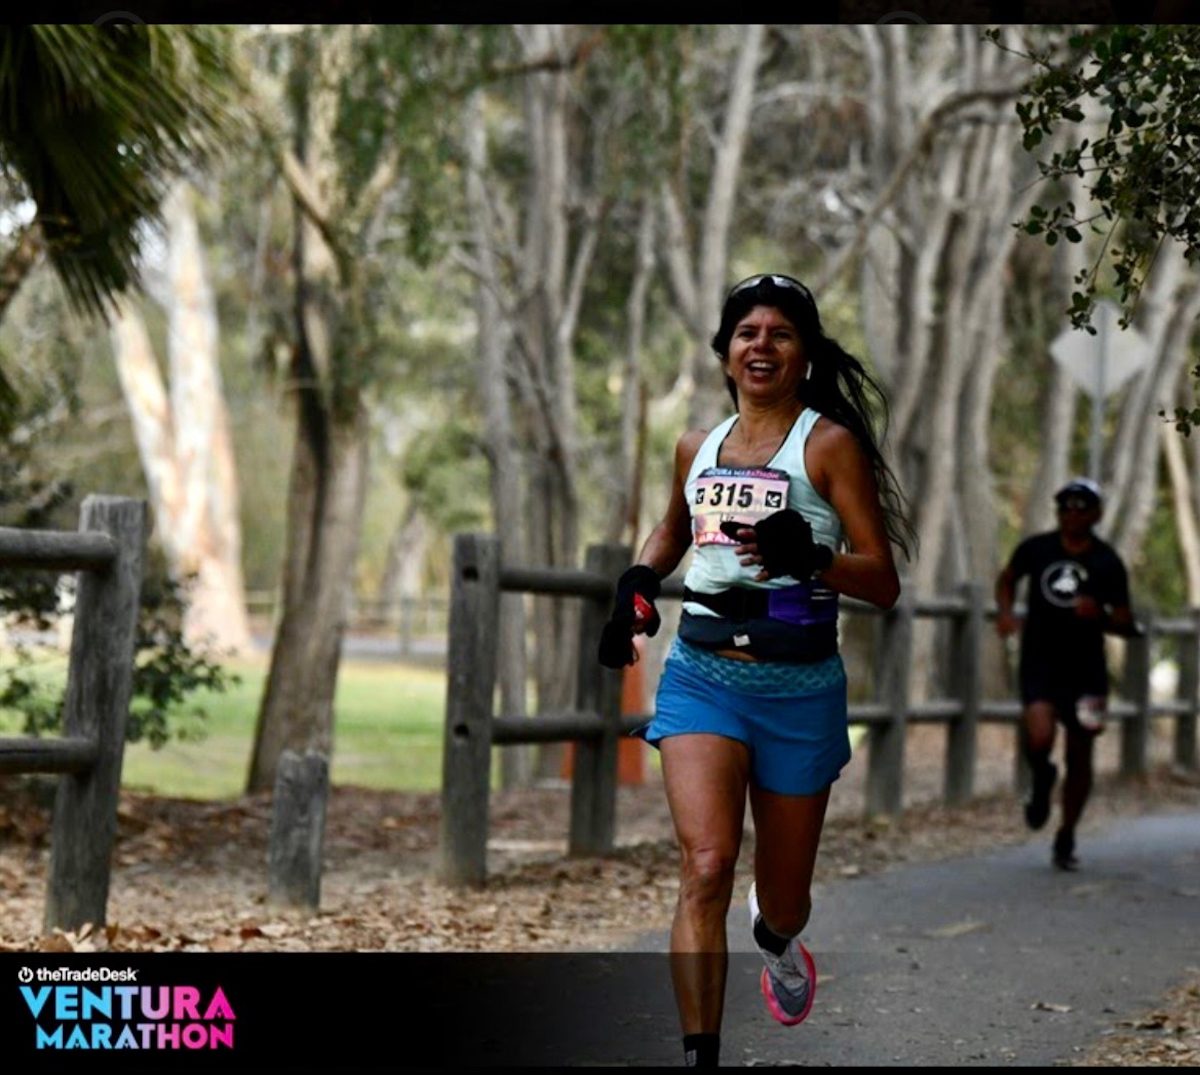 Liz Zaragoza Guerrini manages a smile while racing in the Ventura Half Marathon.